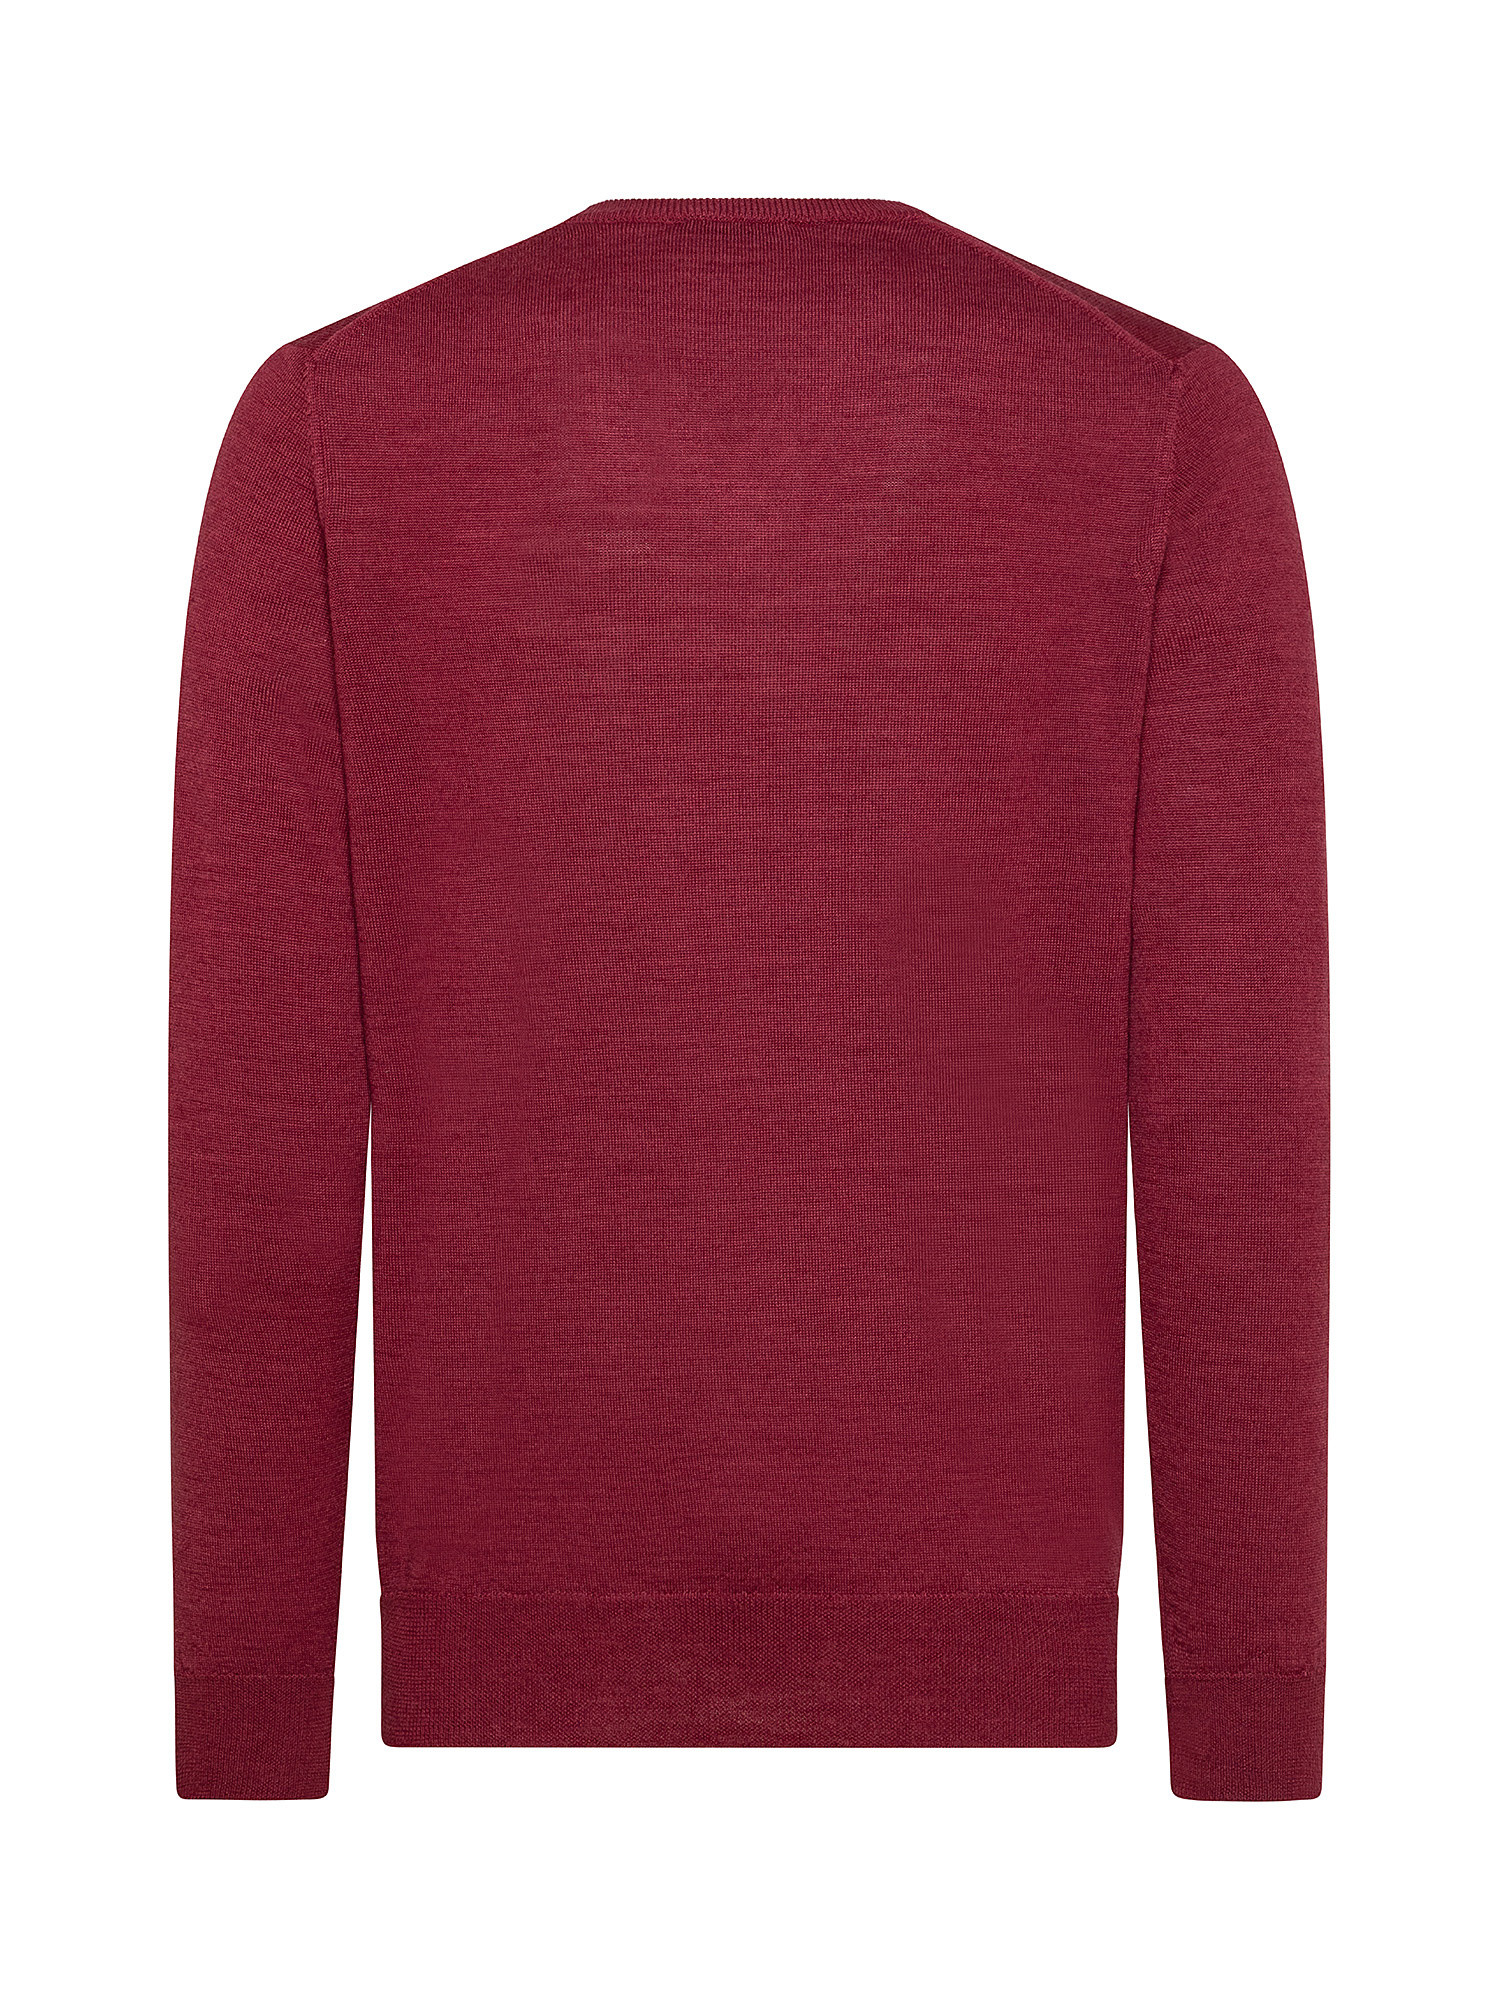 Merino Blend V-neck sweater - Machine washable, Red Bordeaux, large image number 1